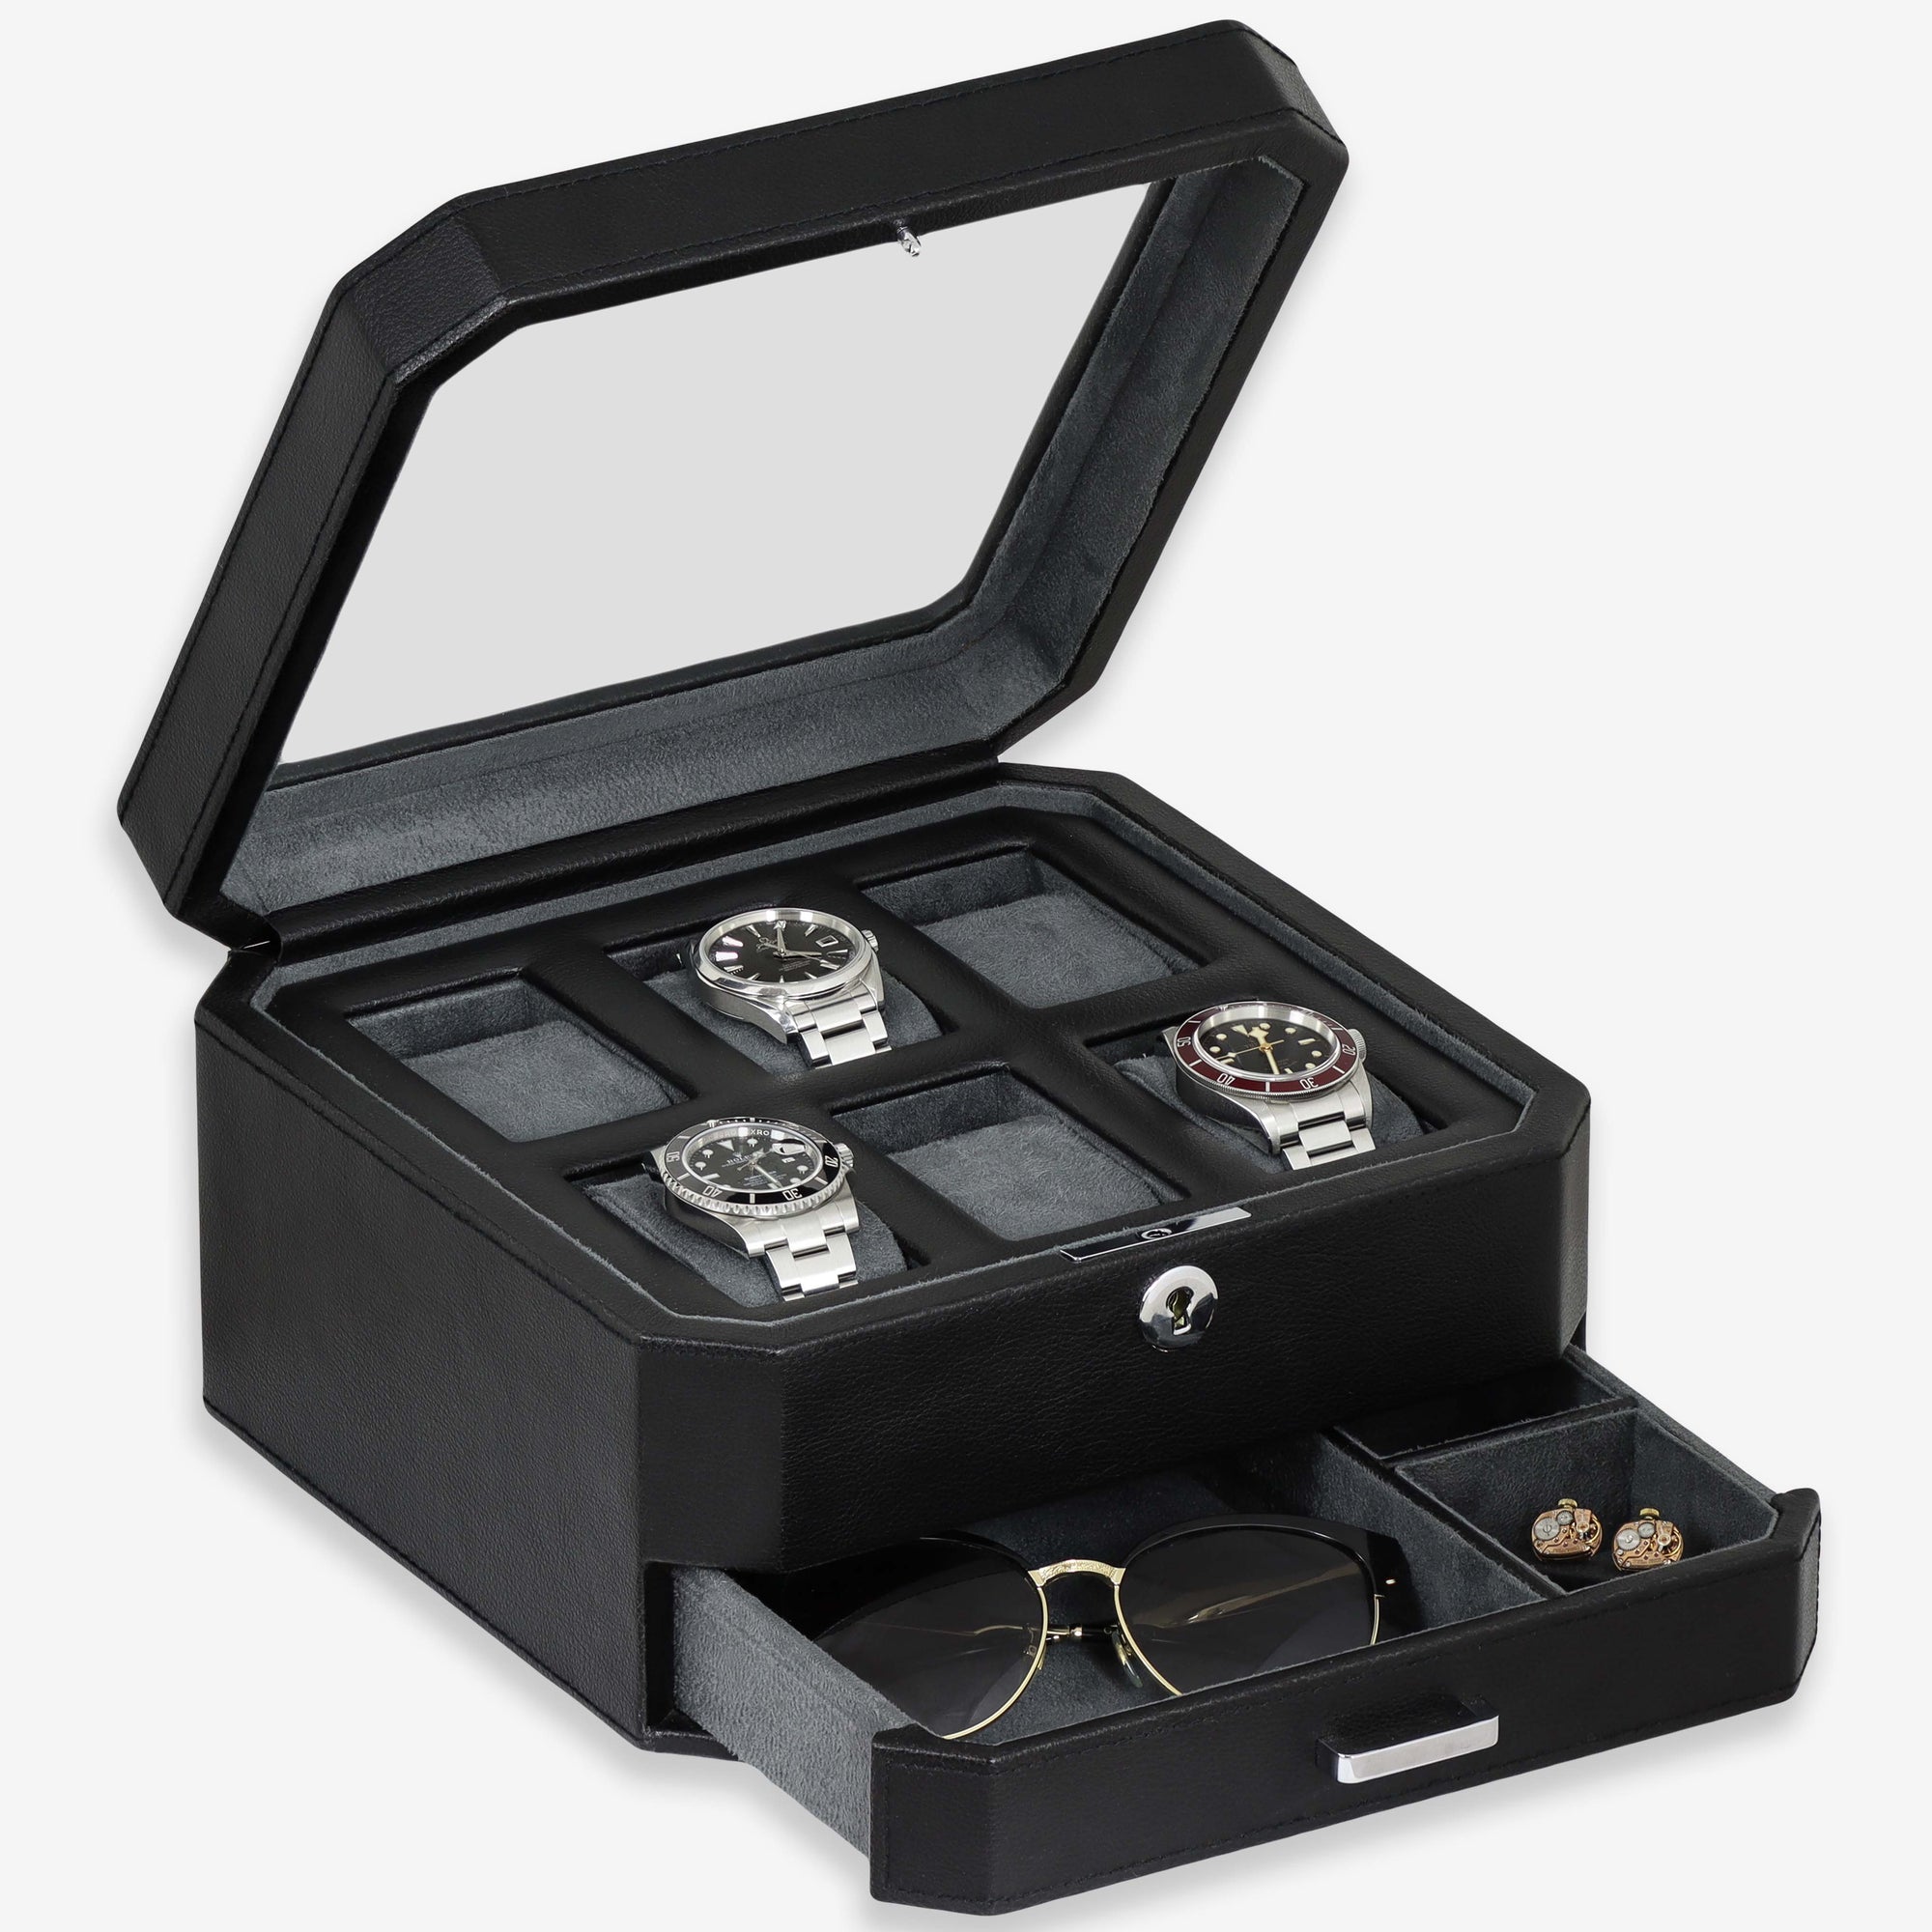  READAEER 6 Slot PU Leather Watch Box Organizer Watch